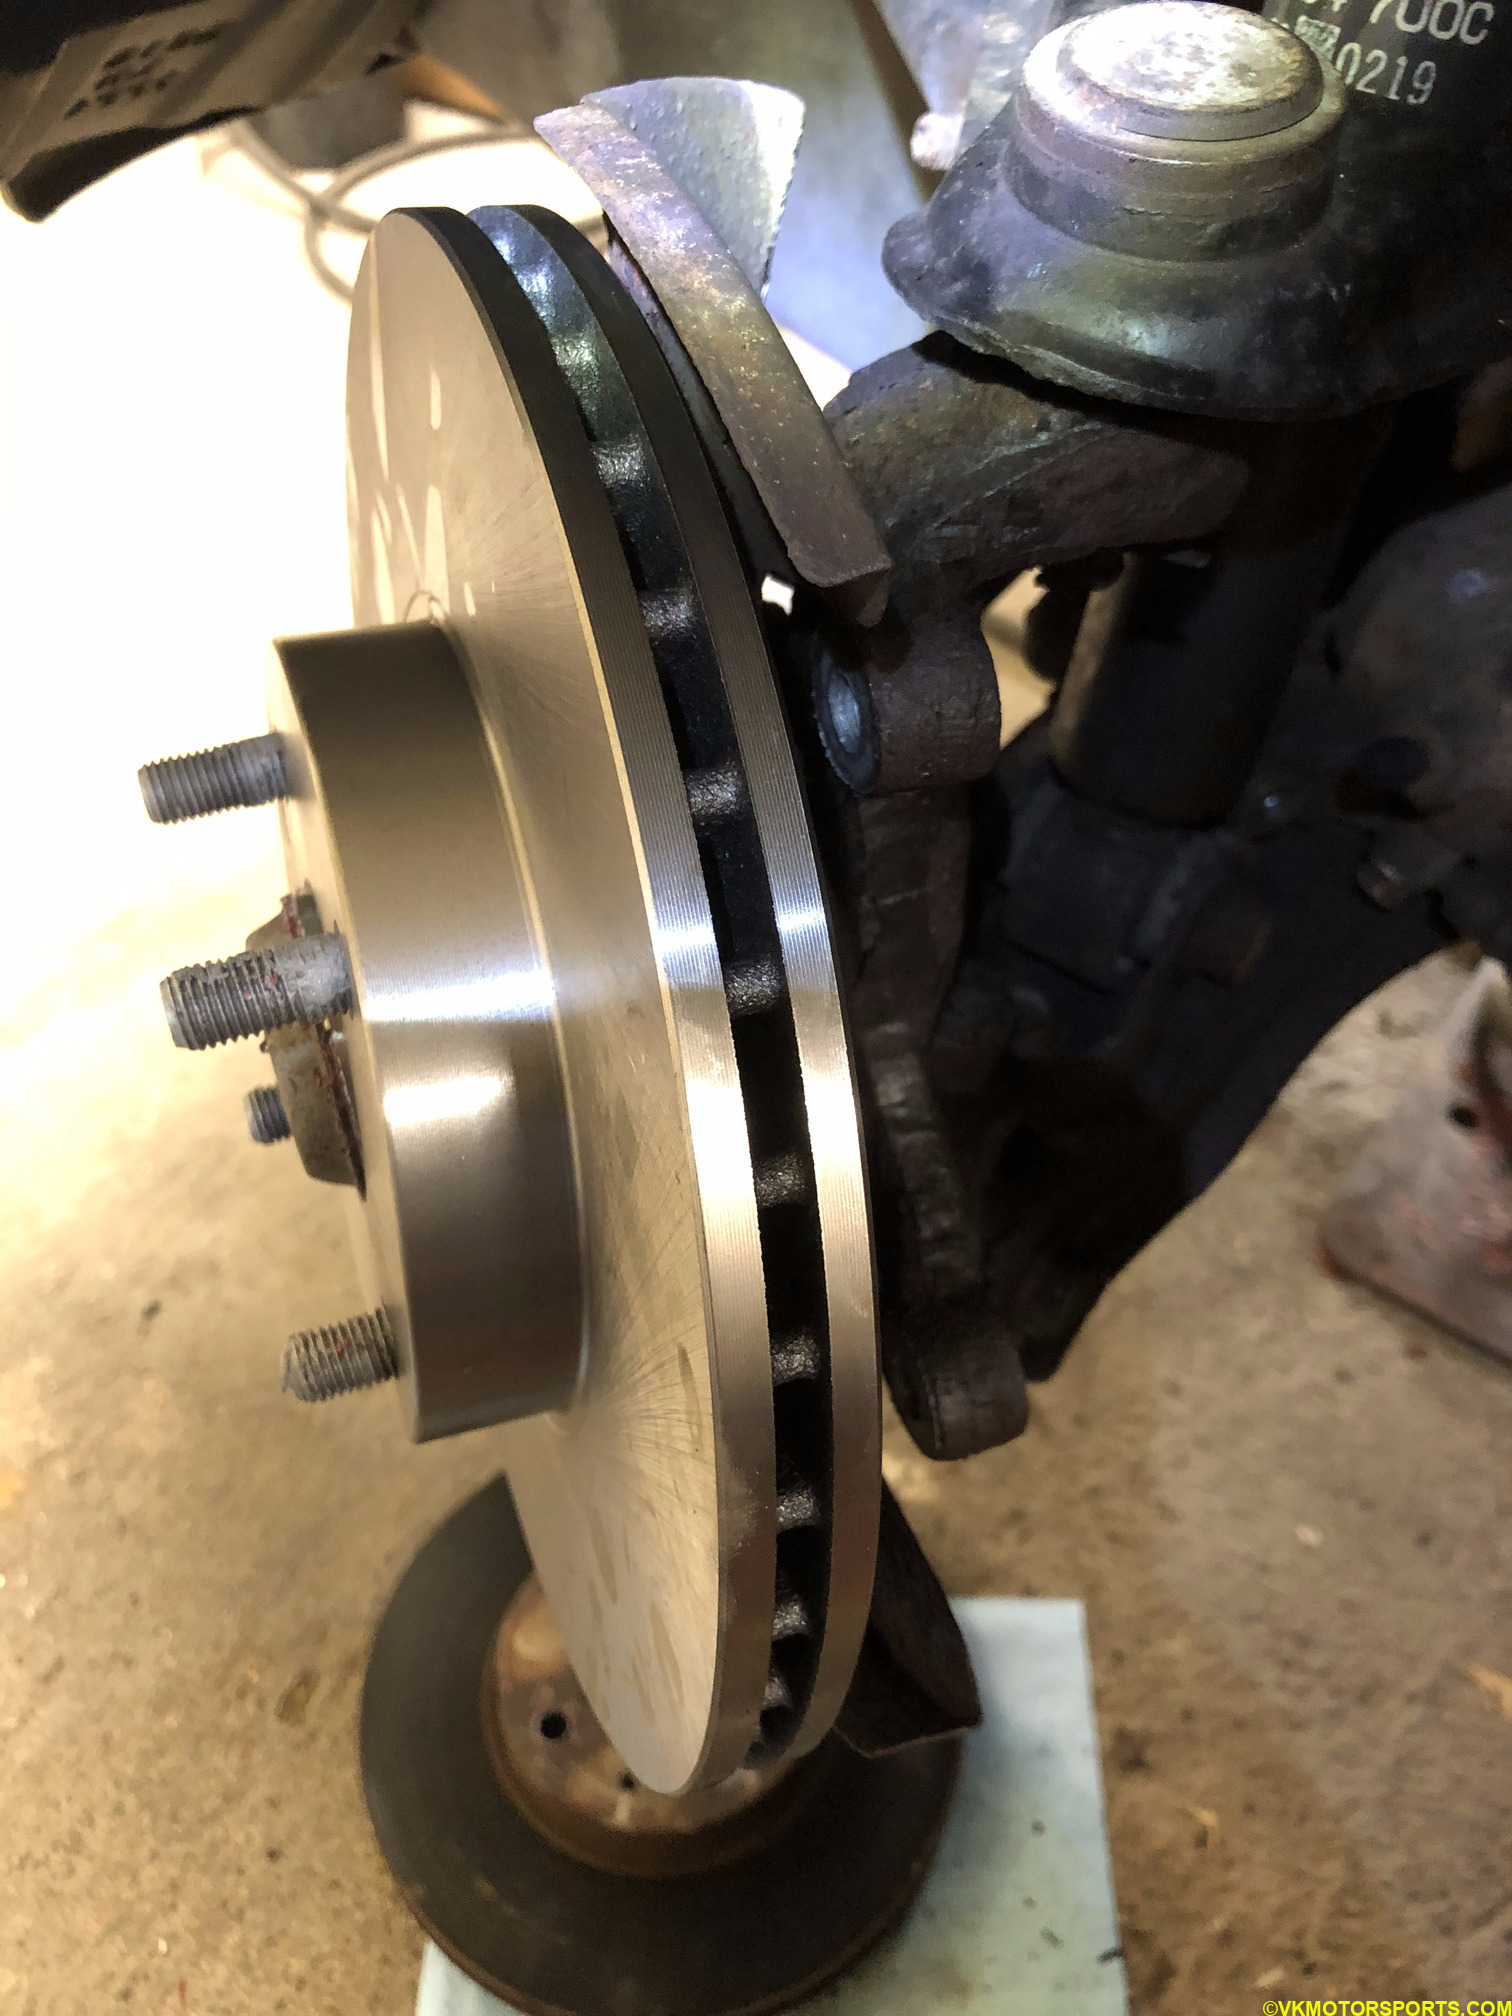 Install the new rotor on the wheel hub